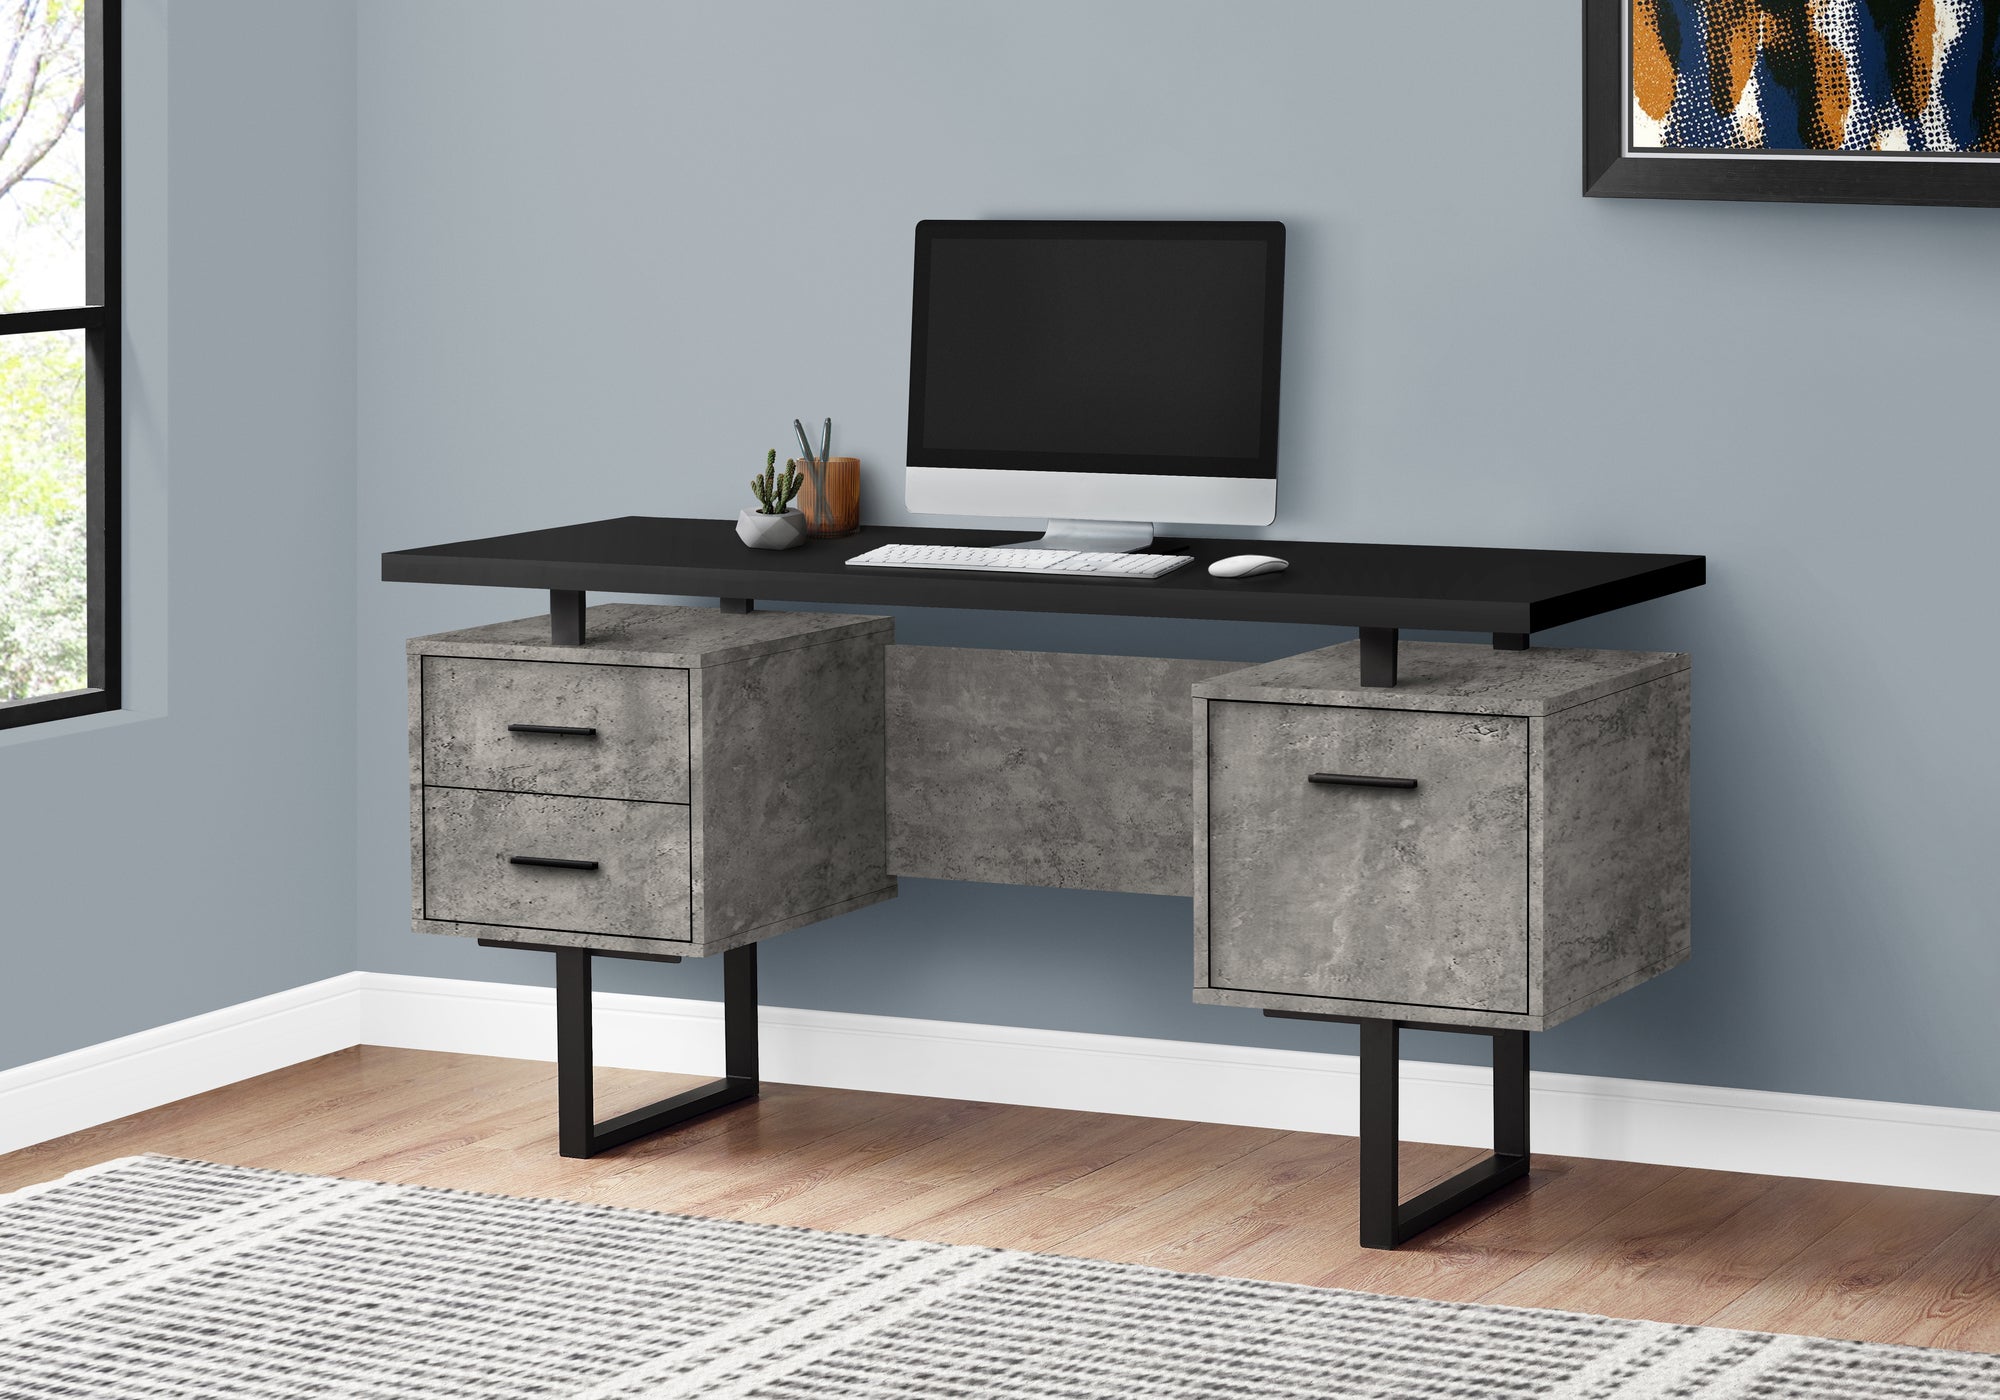 MN-437632    Computer Desk, Home Office, Laptop, Left, Right Set-Up, Storage Drawers, 60"L, Metal, Laminate, Grey Concrete, Black, Contemporary, Modern